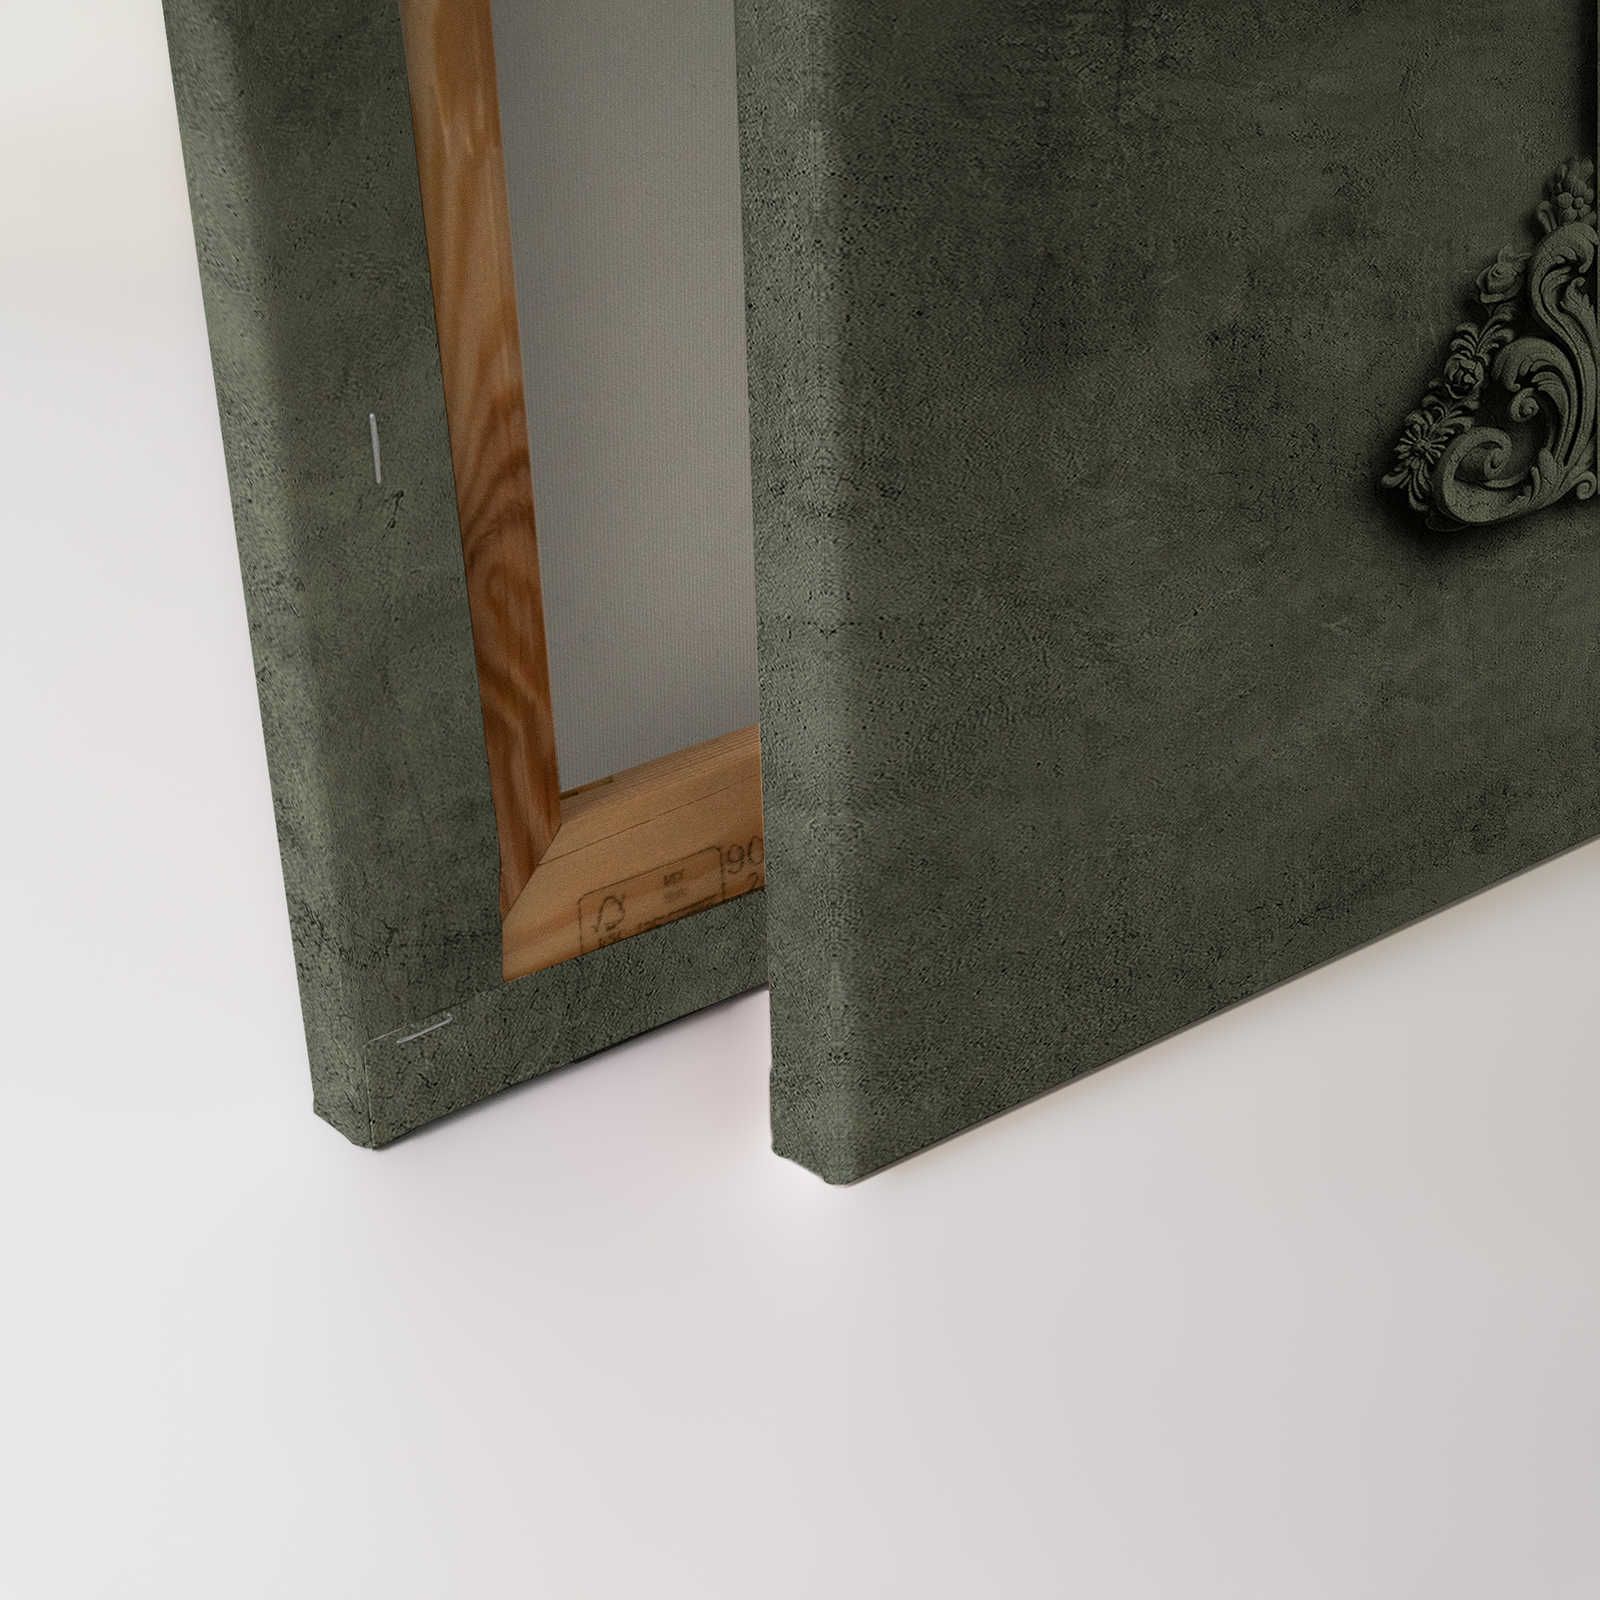             Lyon 2 - Canvas schilderij 3D stucco frame & gipslook in groen - 0.90 m x 0.60 m
        